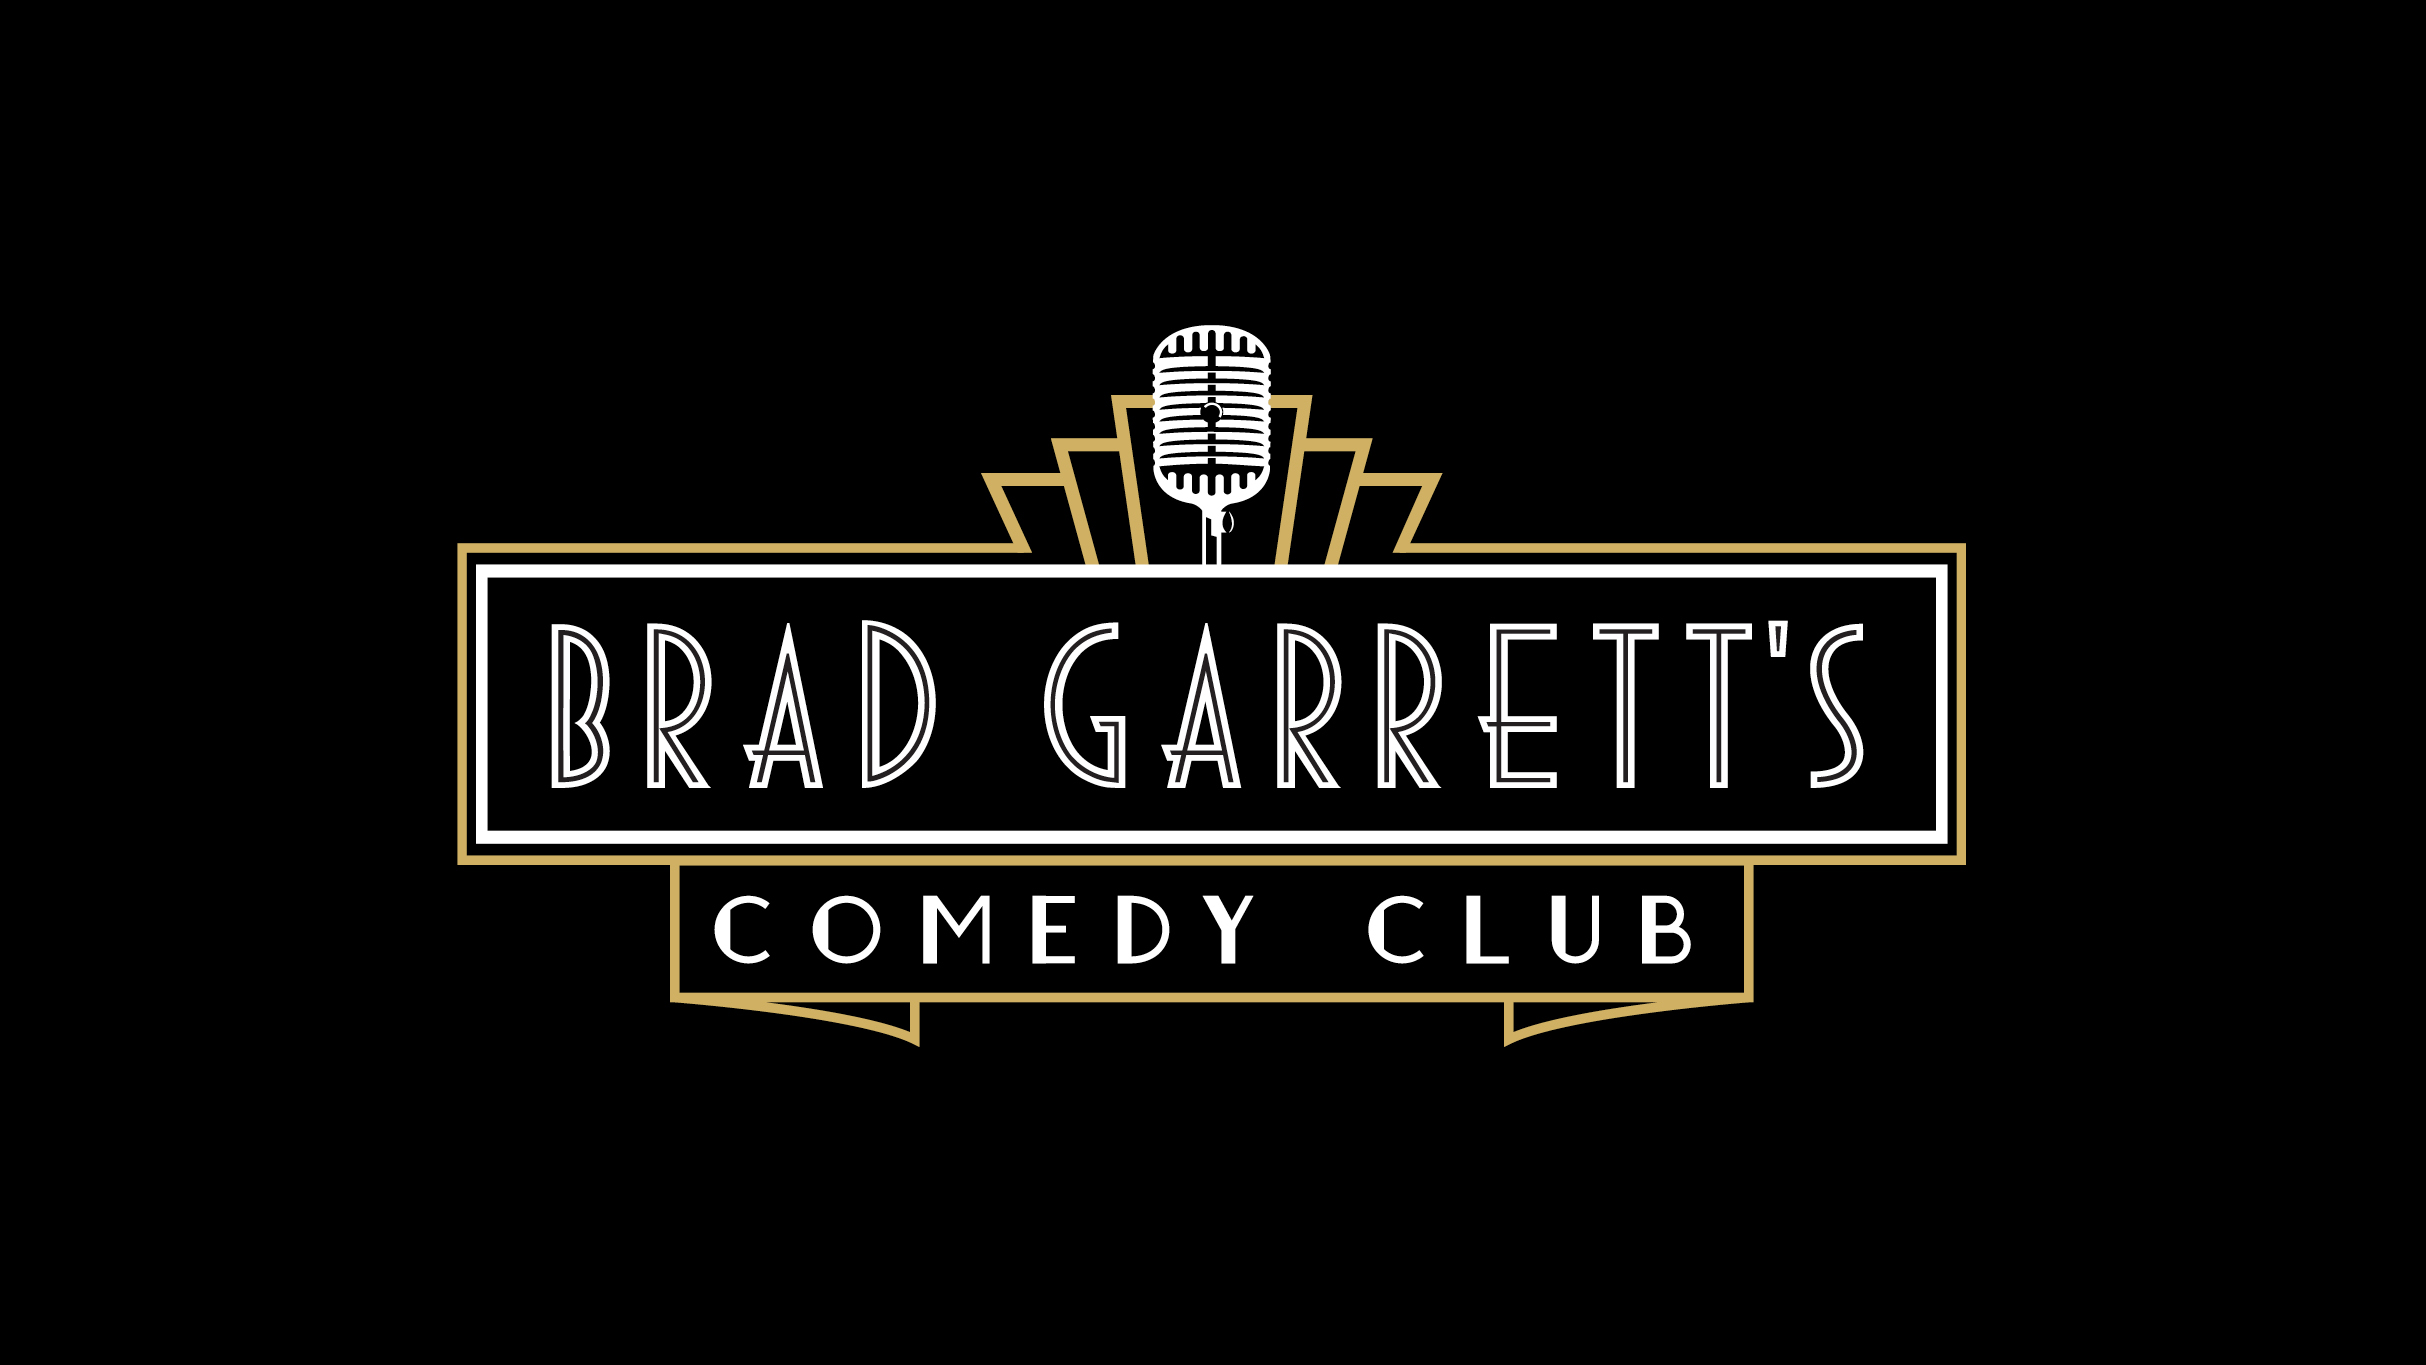 Brad Garrett Comedy Club